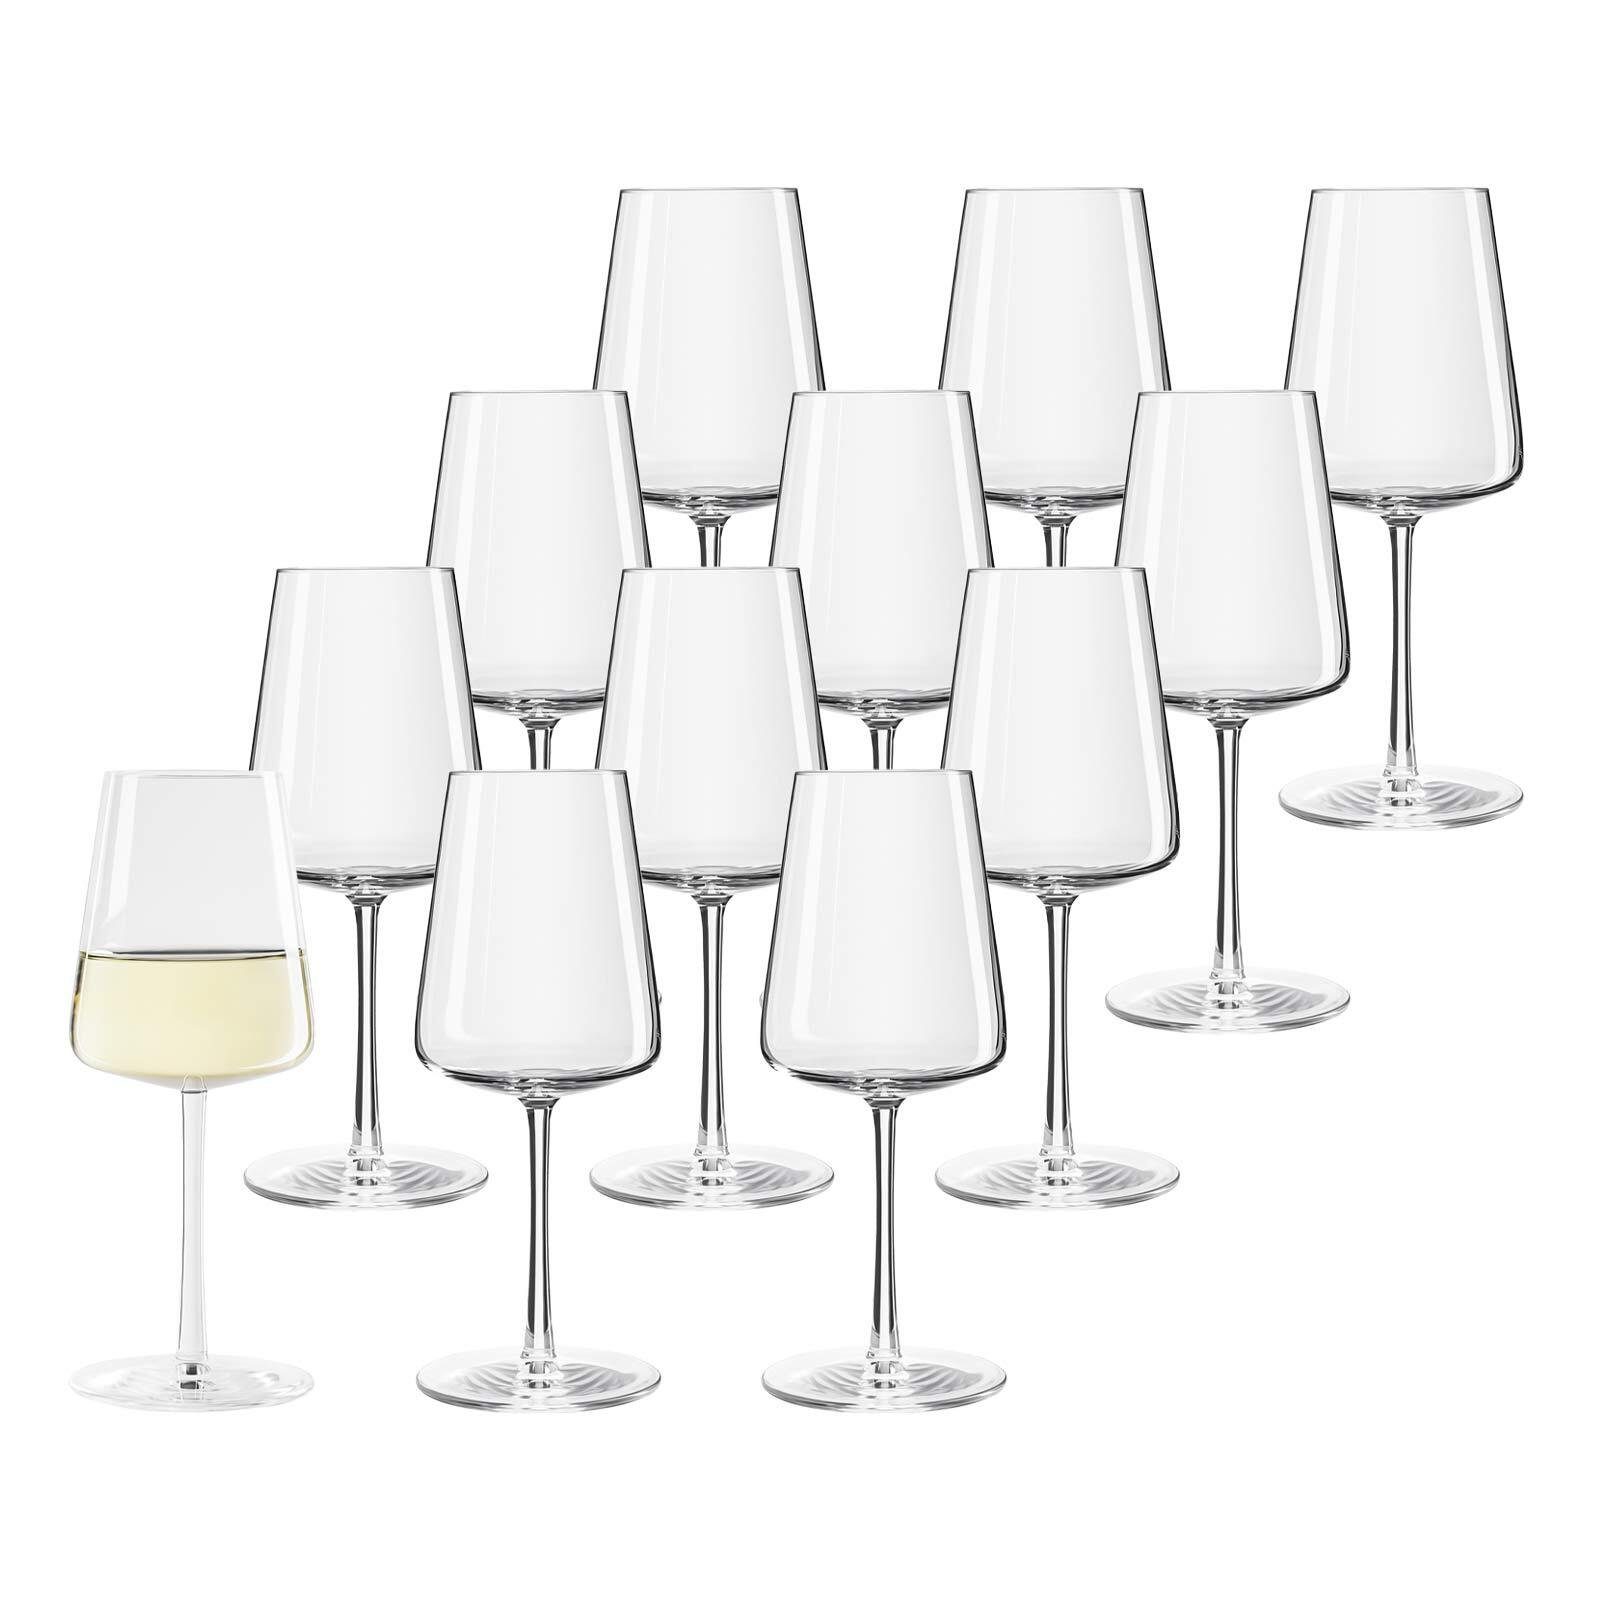 Stölzle Weißweinglas Power Келихи для білого вина 400 ml 12er Set, Glas